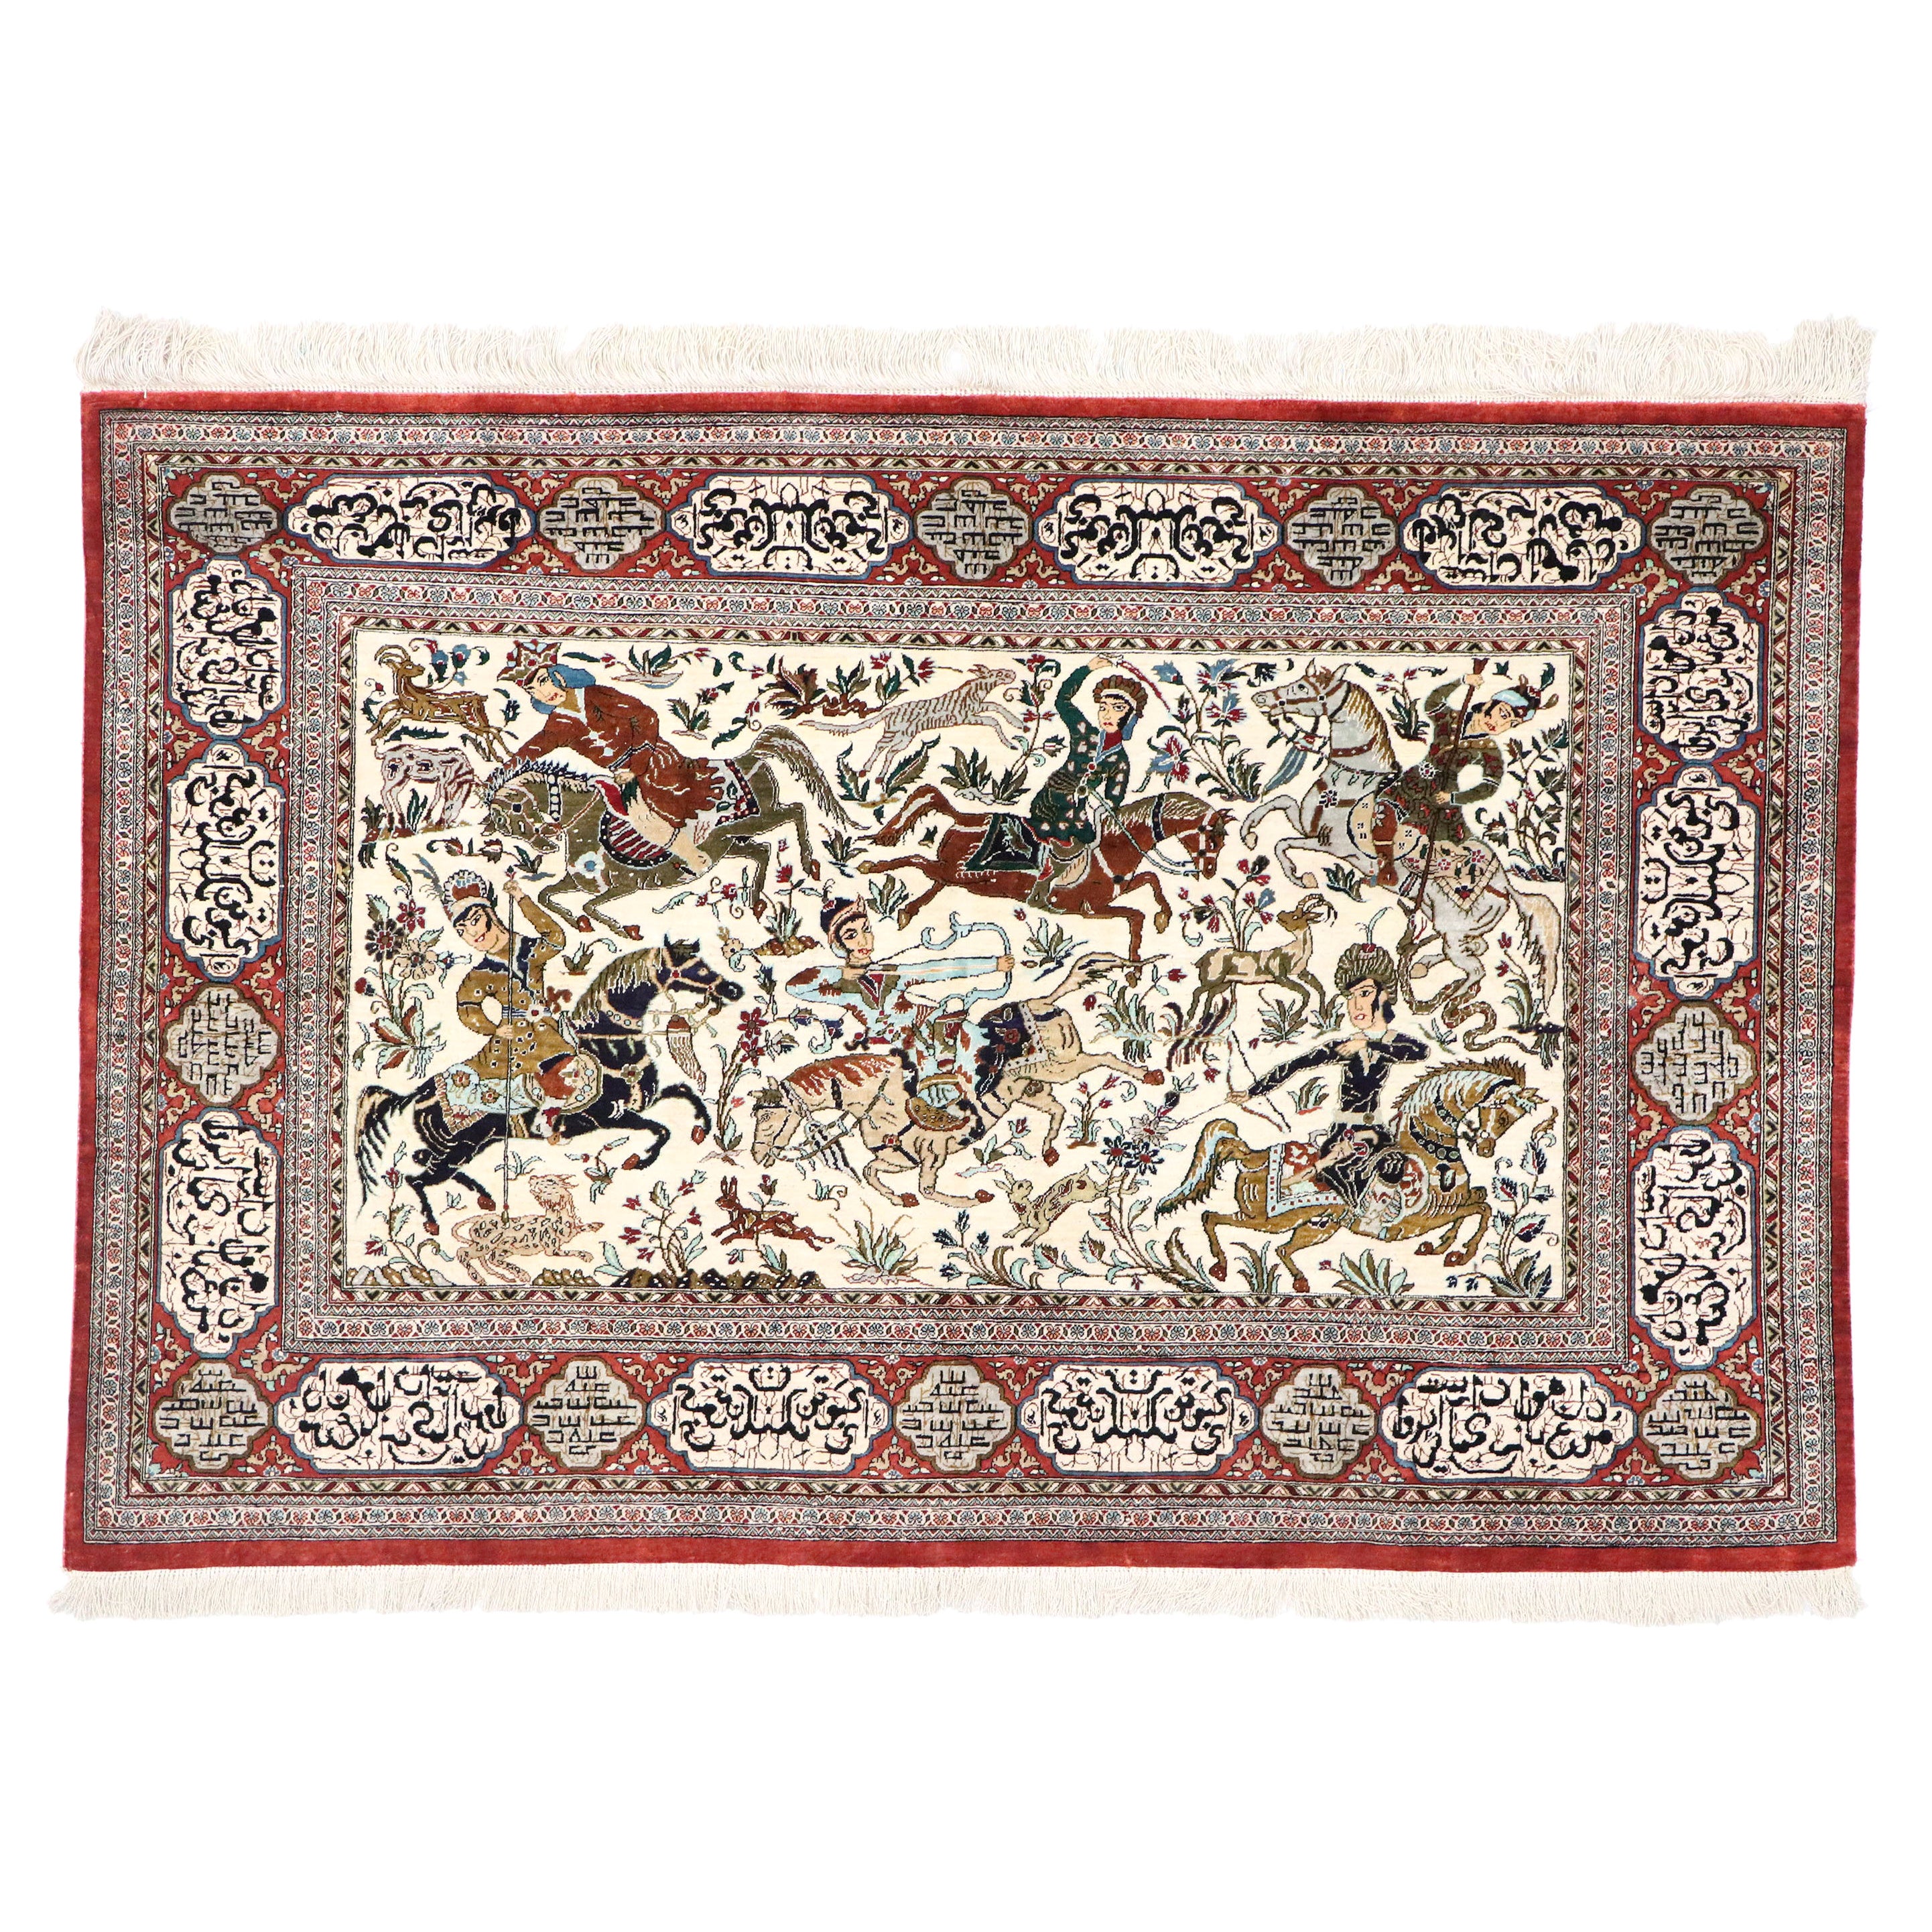 Vintage Persian Silk Qum Hunting Rug with Medieval Style